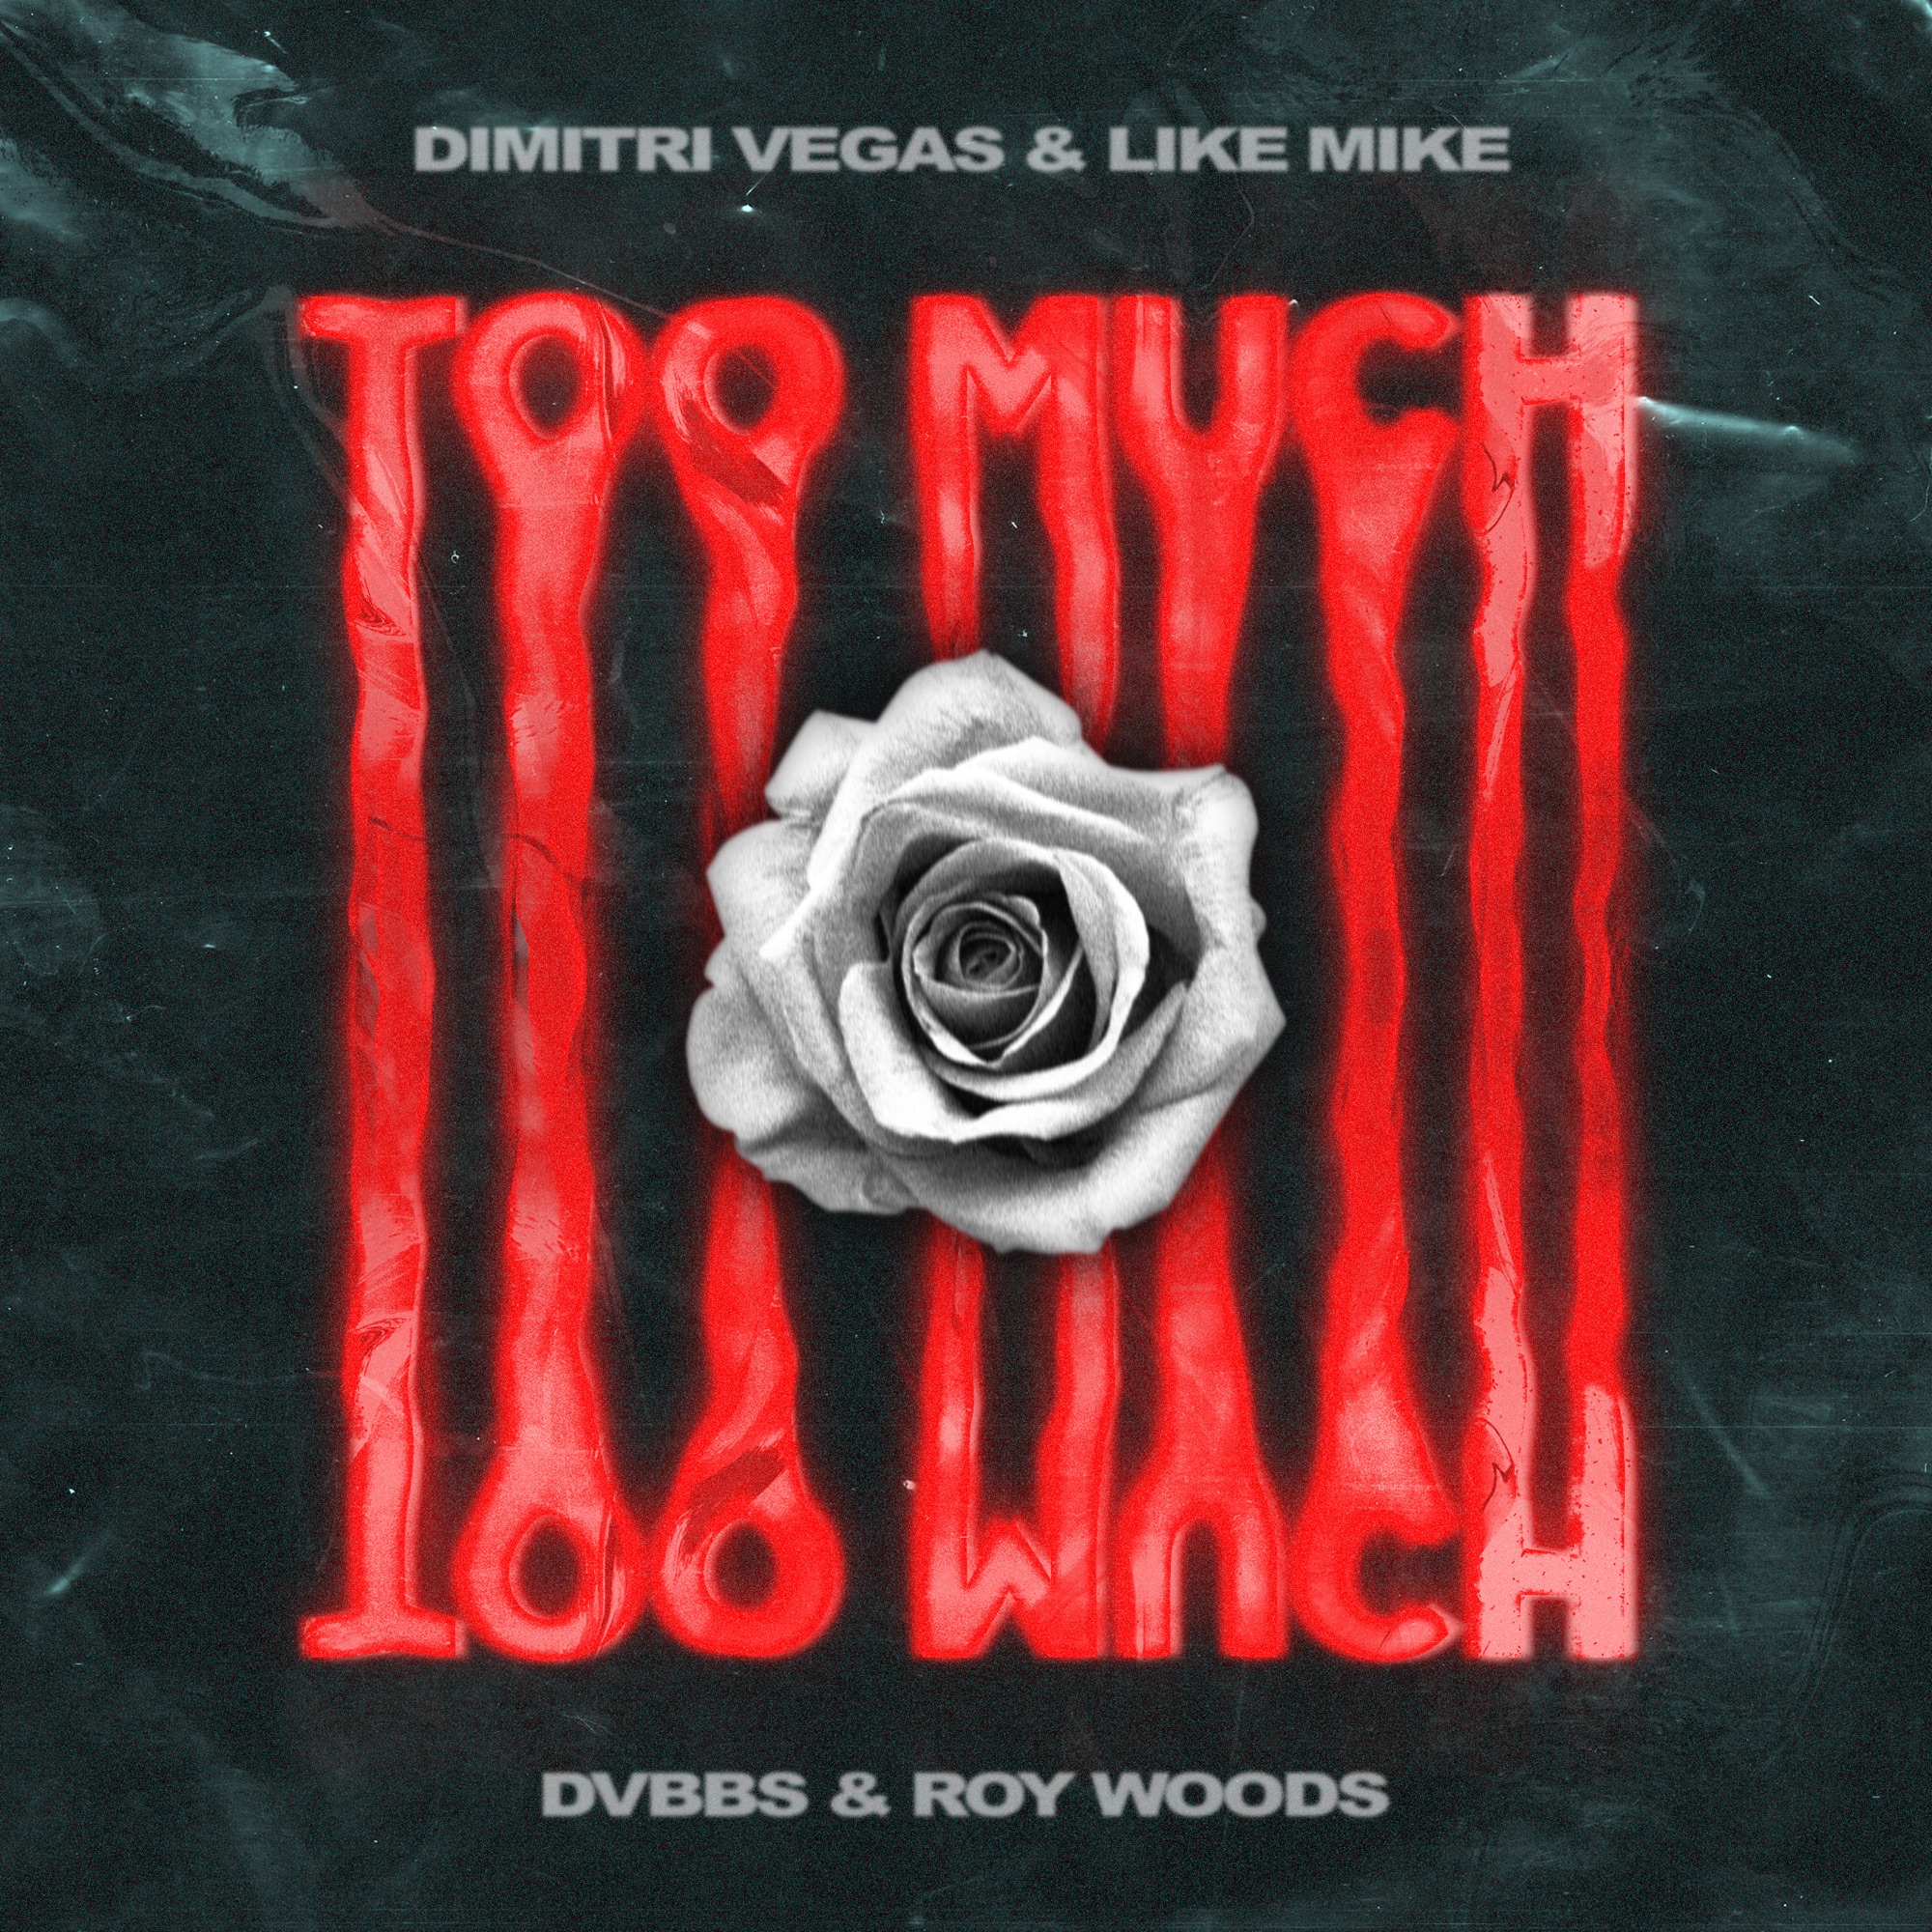 Dimitri Vegas & Like Mike, DVBBS & Roy Woods - Too Much - Single